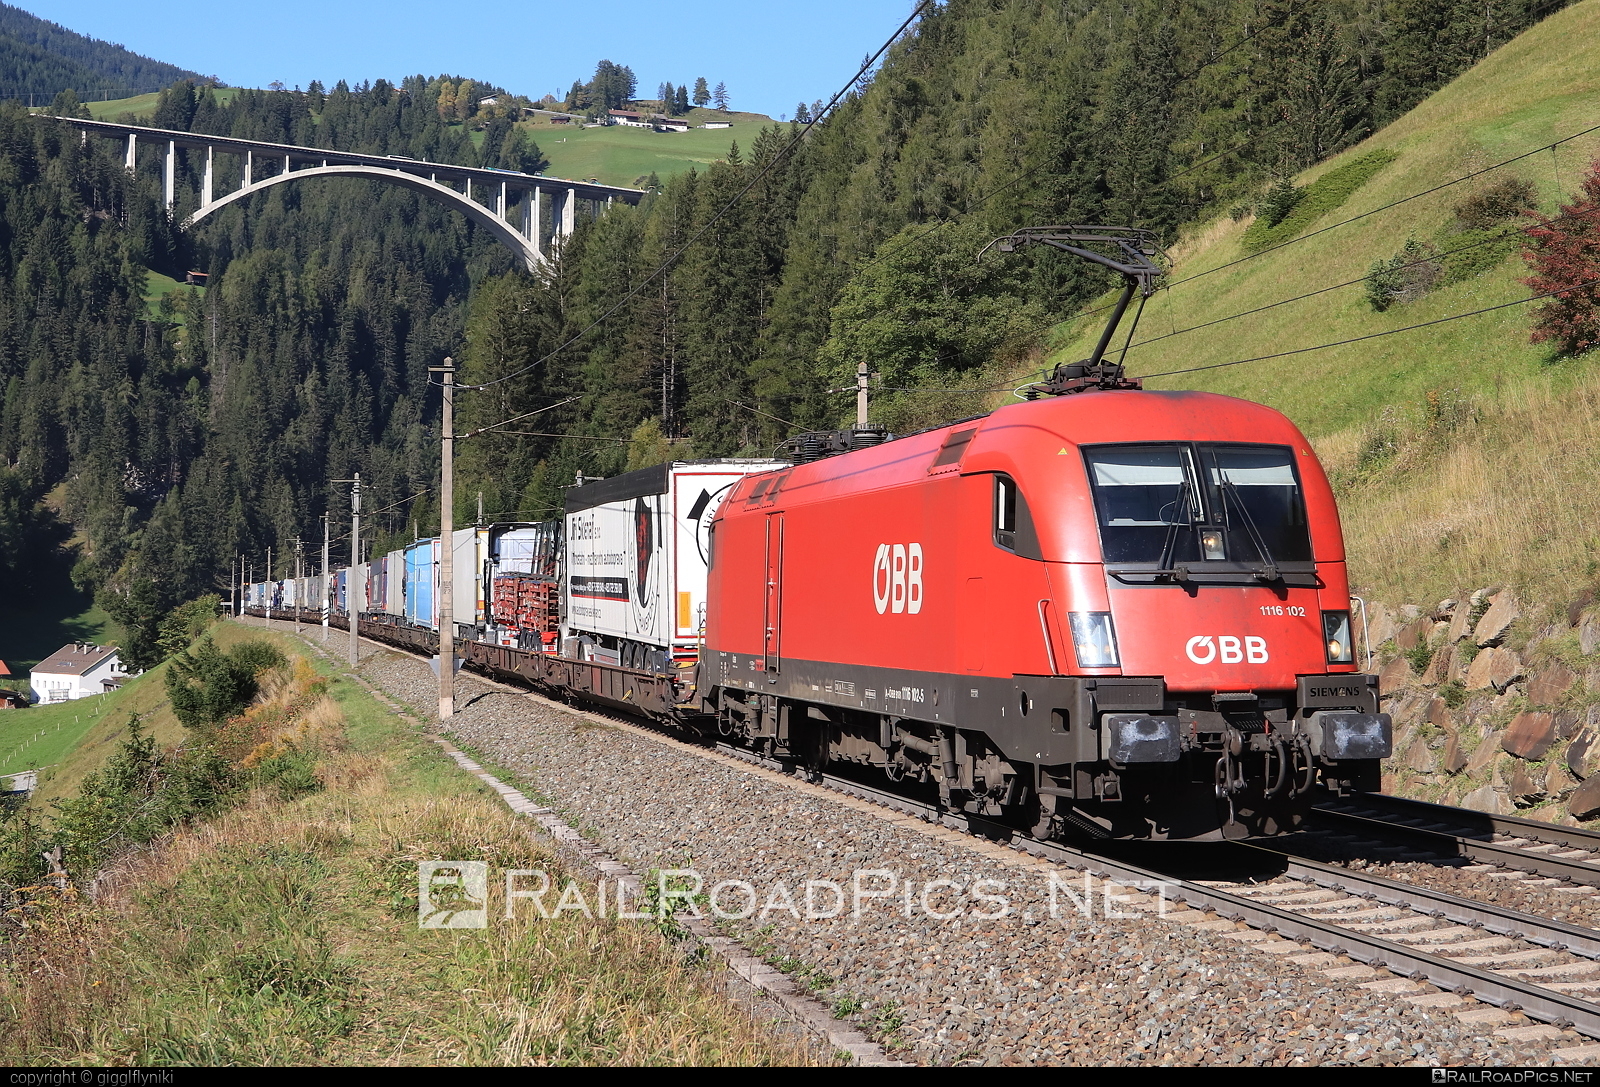 Siemens ES 64 U2 - 1116 102 operated by Rail Cargo Austria AG #es64 #es64u2 #eurosprinter #flatwagon #obb #osterreichischebundesbahnen #rcw #siemens #siemensEs64 #siemensEs64u2 #siemenstaurus #taurus #tauruslocomotive #truck